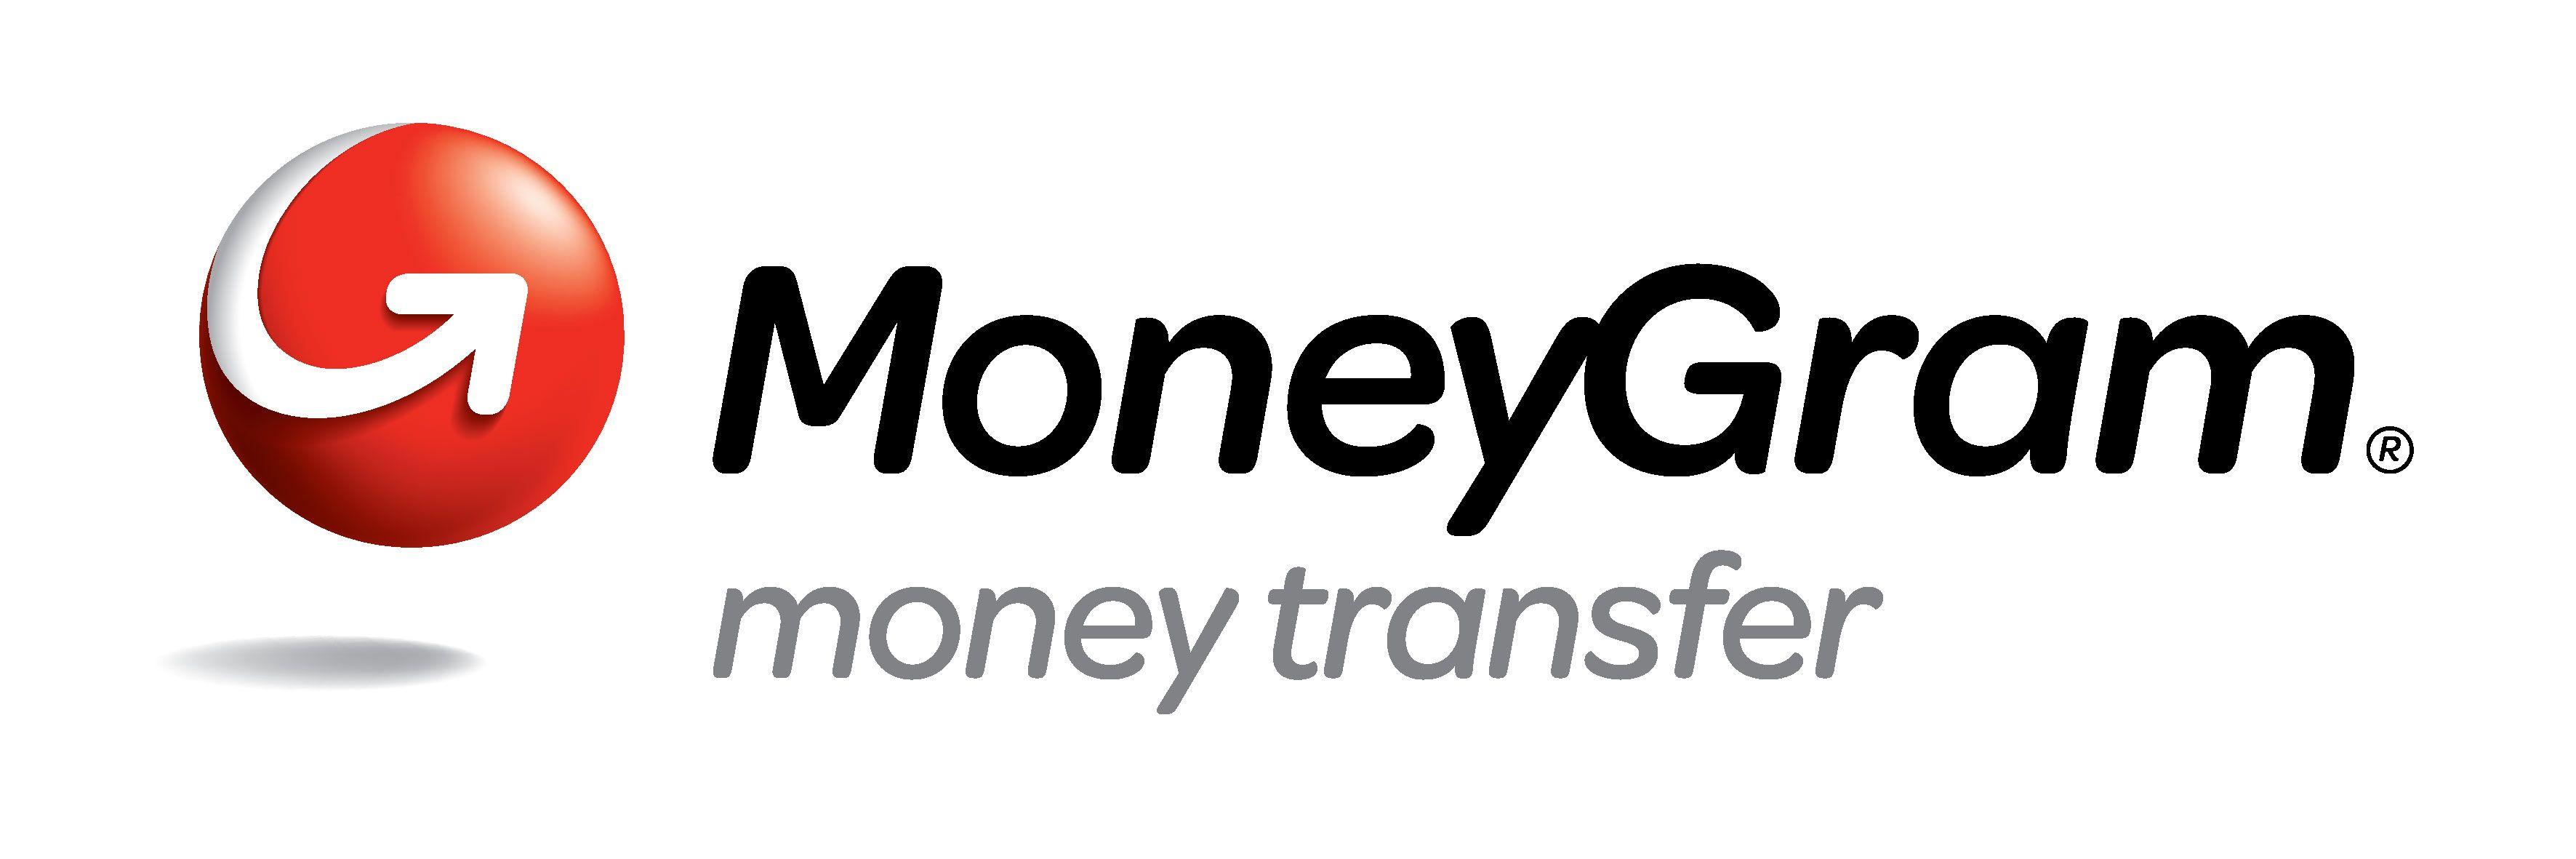 MoneyGram Logo - MoneyGram Money Transfer Service in Kenya, Send and Receive Money